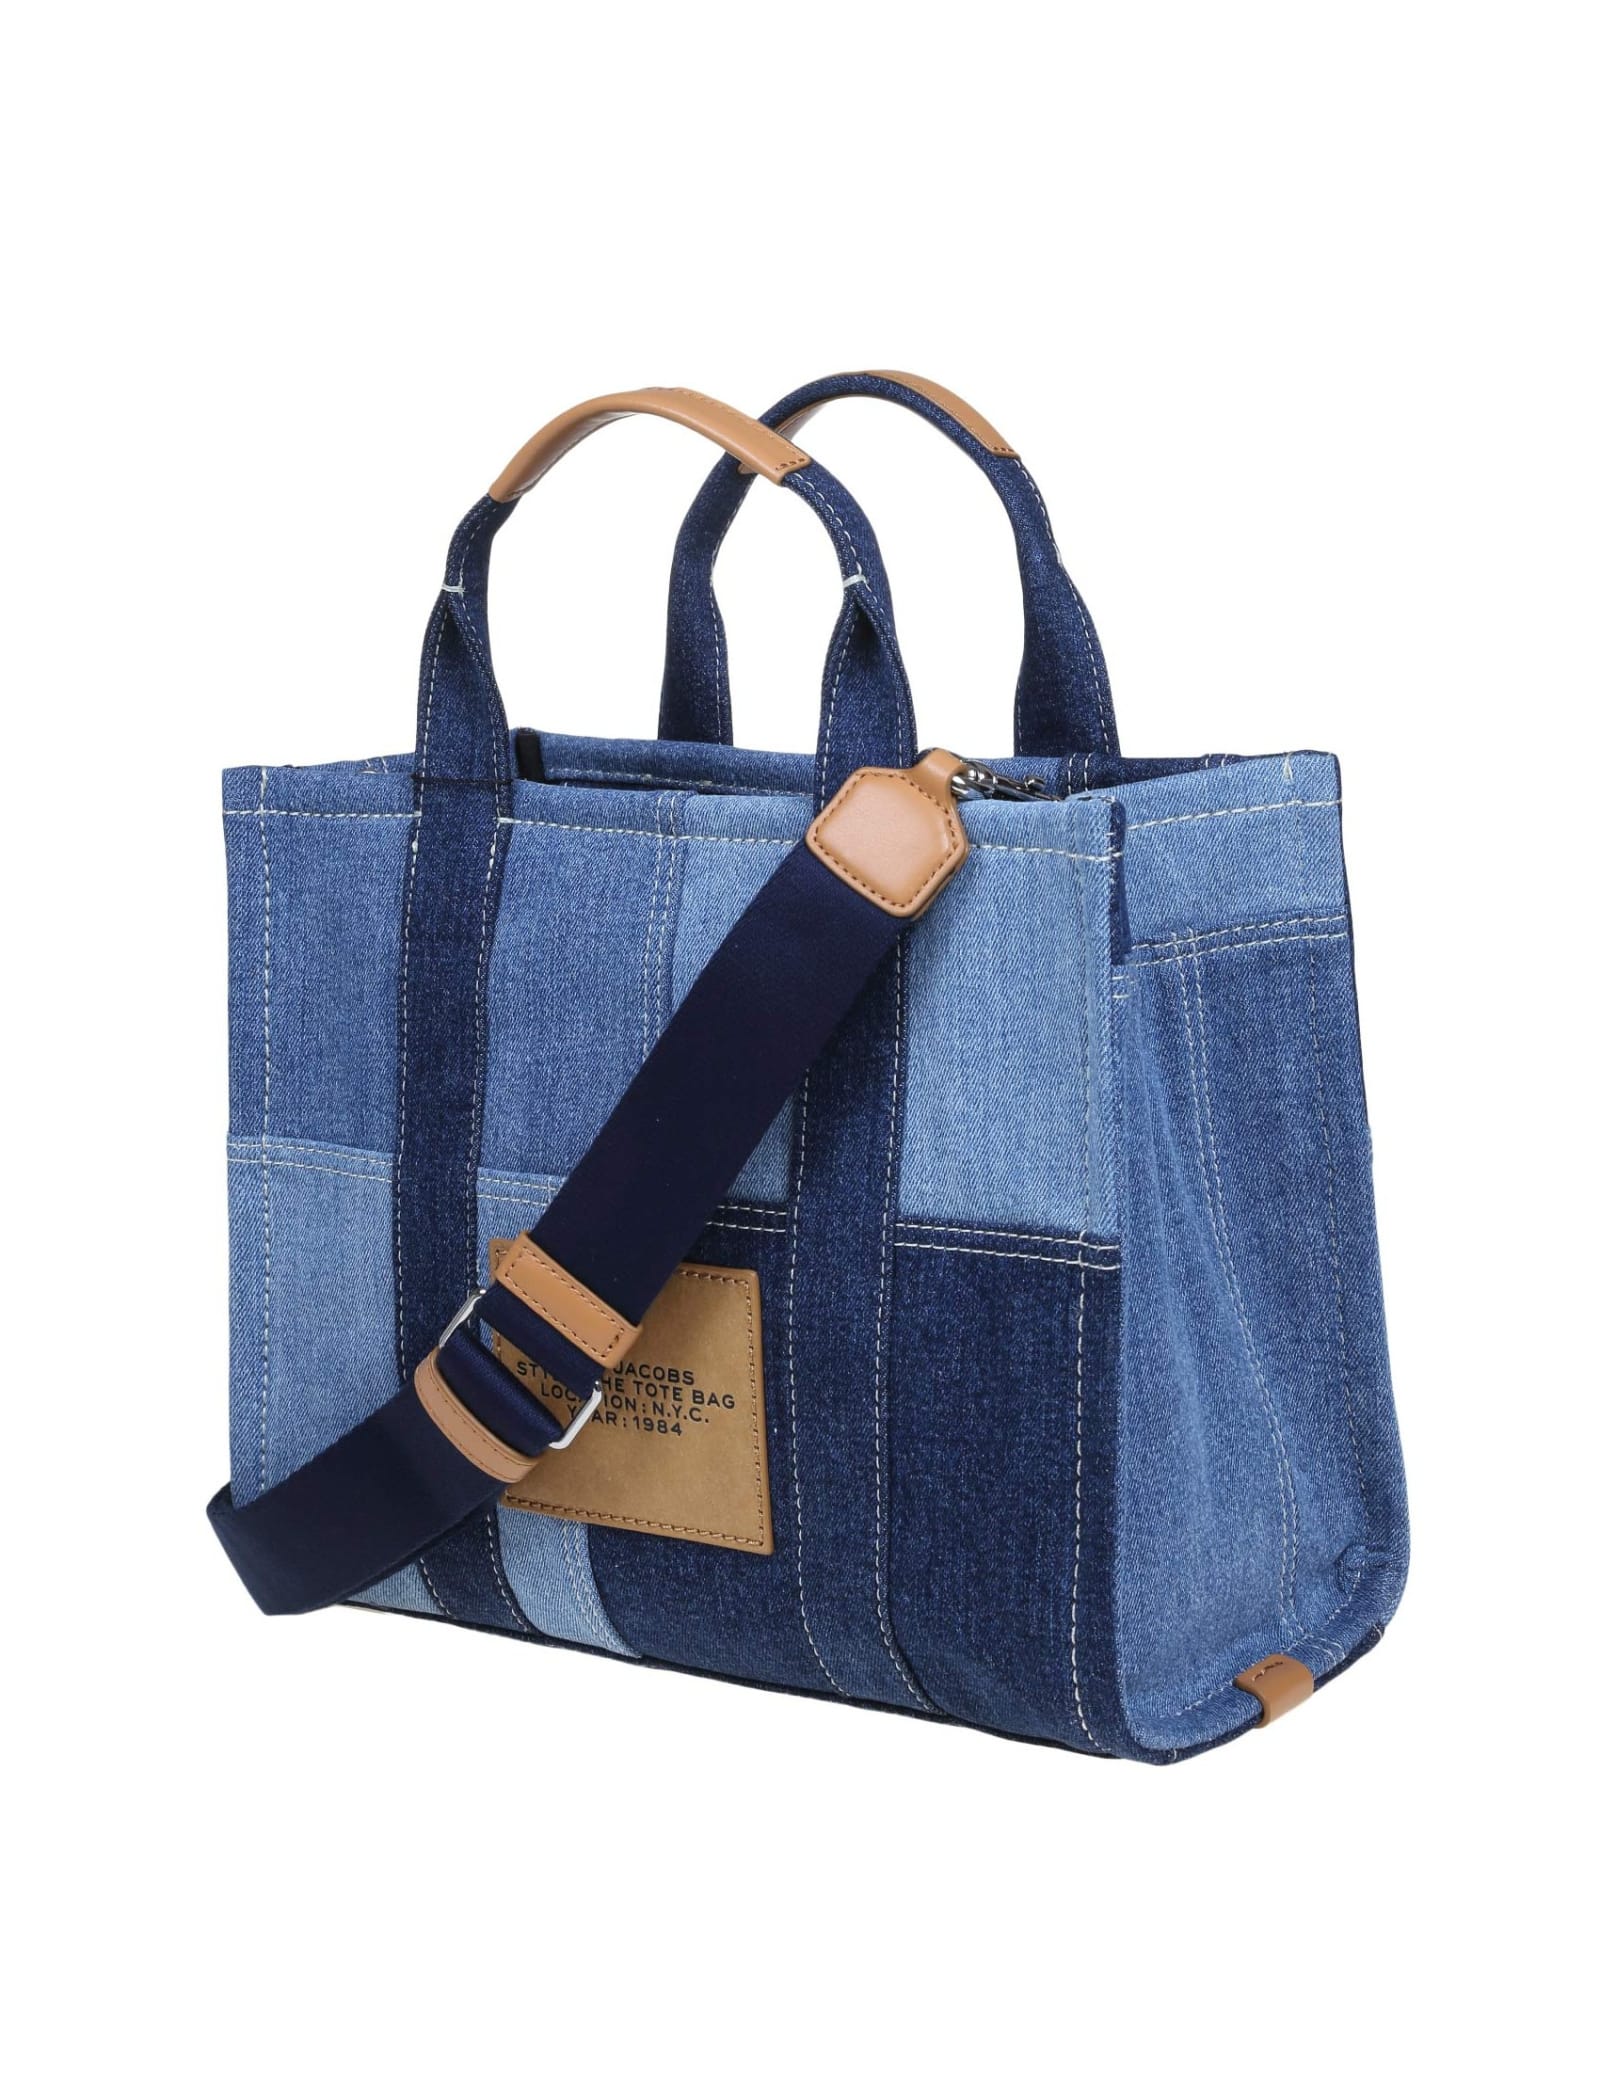 Shop Marc Jacobs The Medium Bag In Blue Denim Jeans